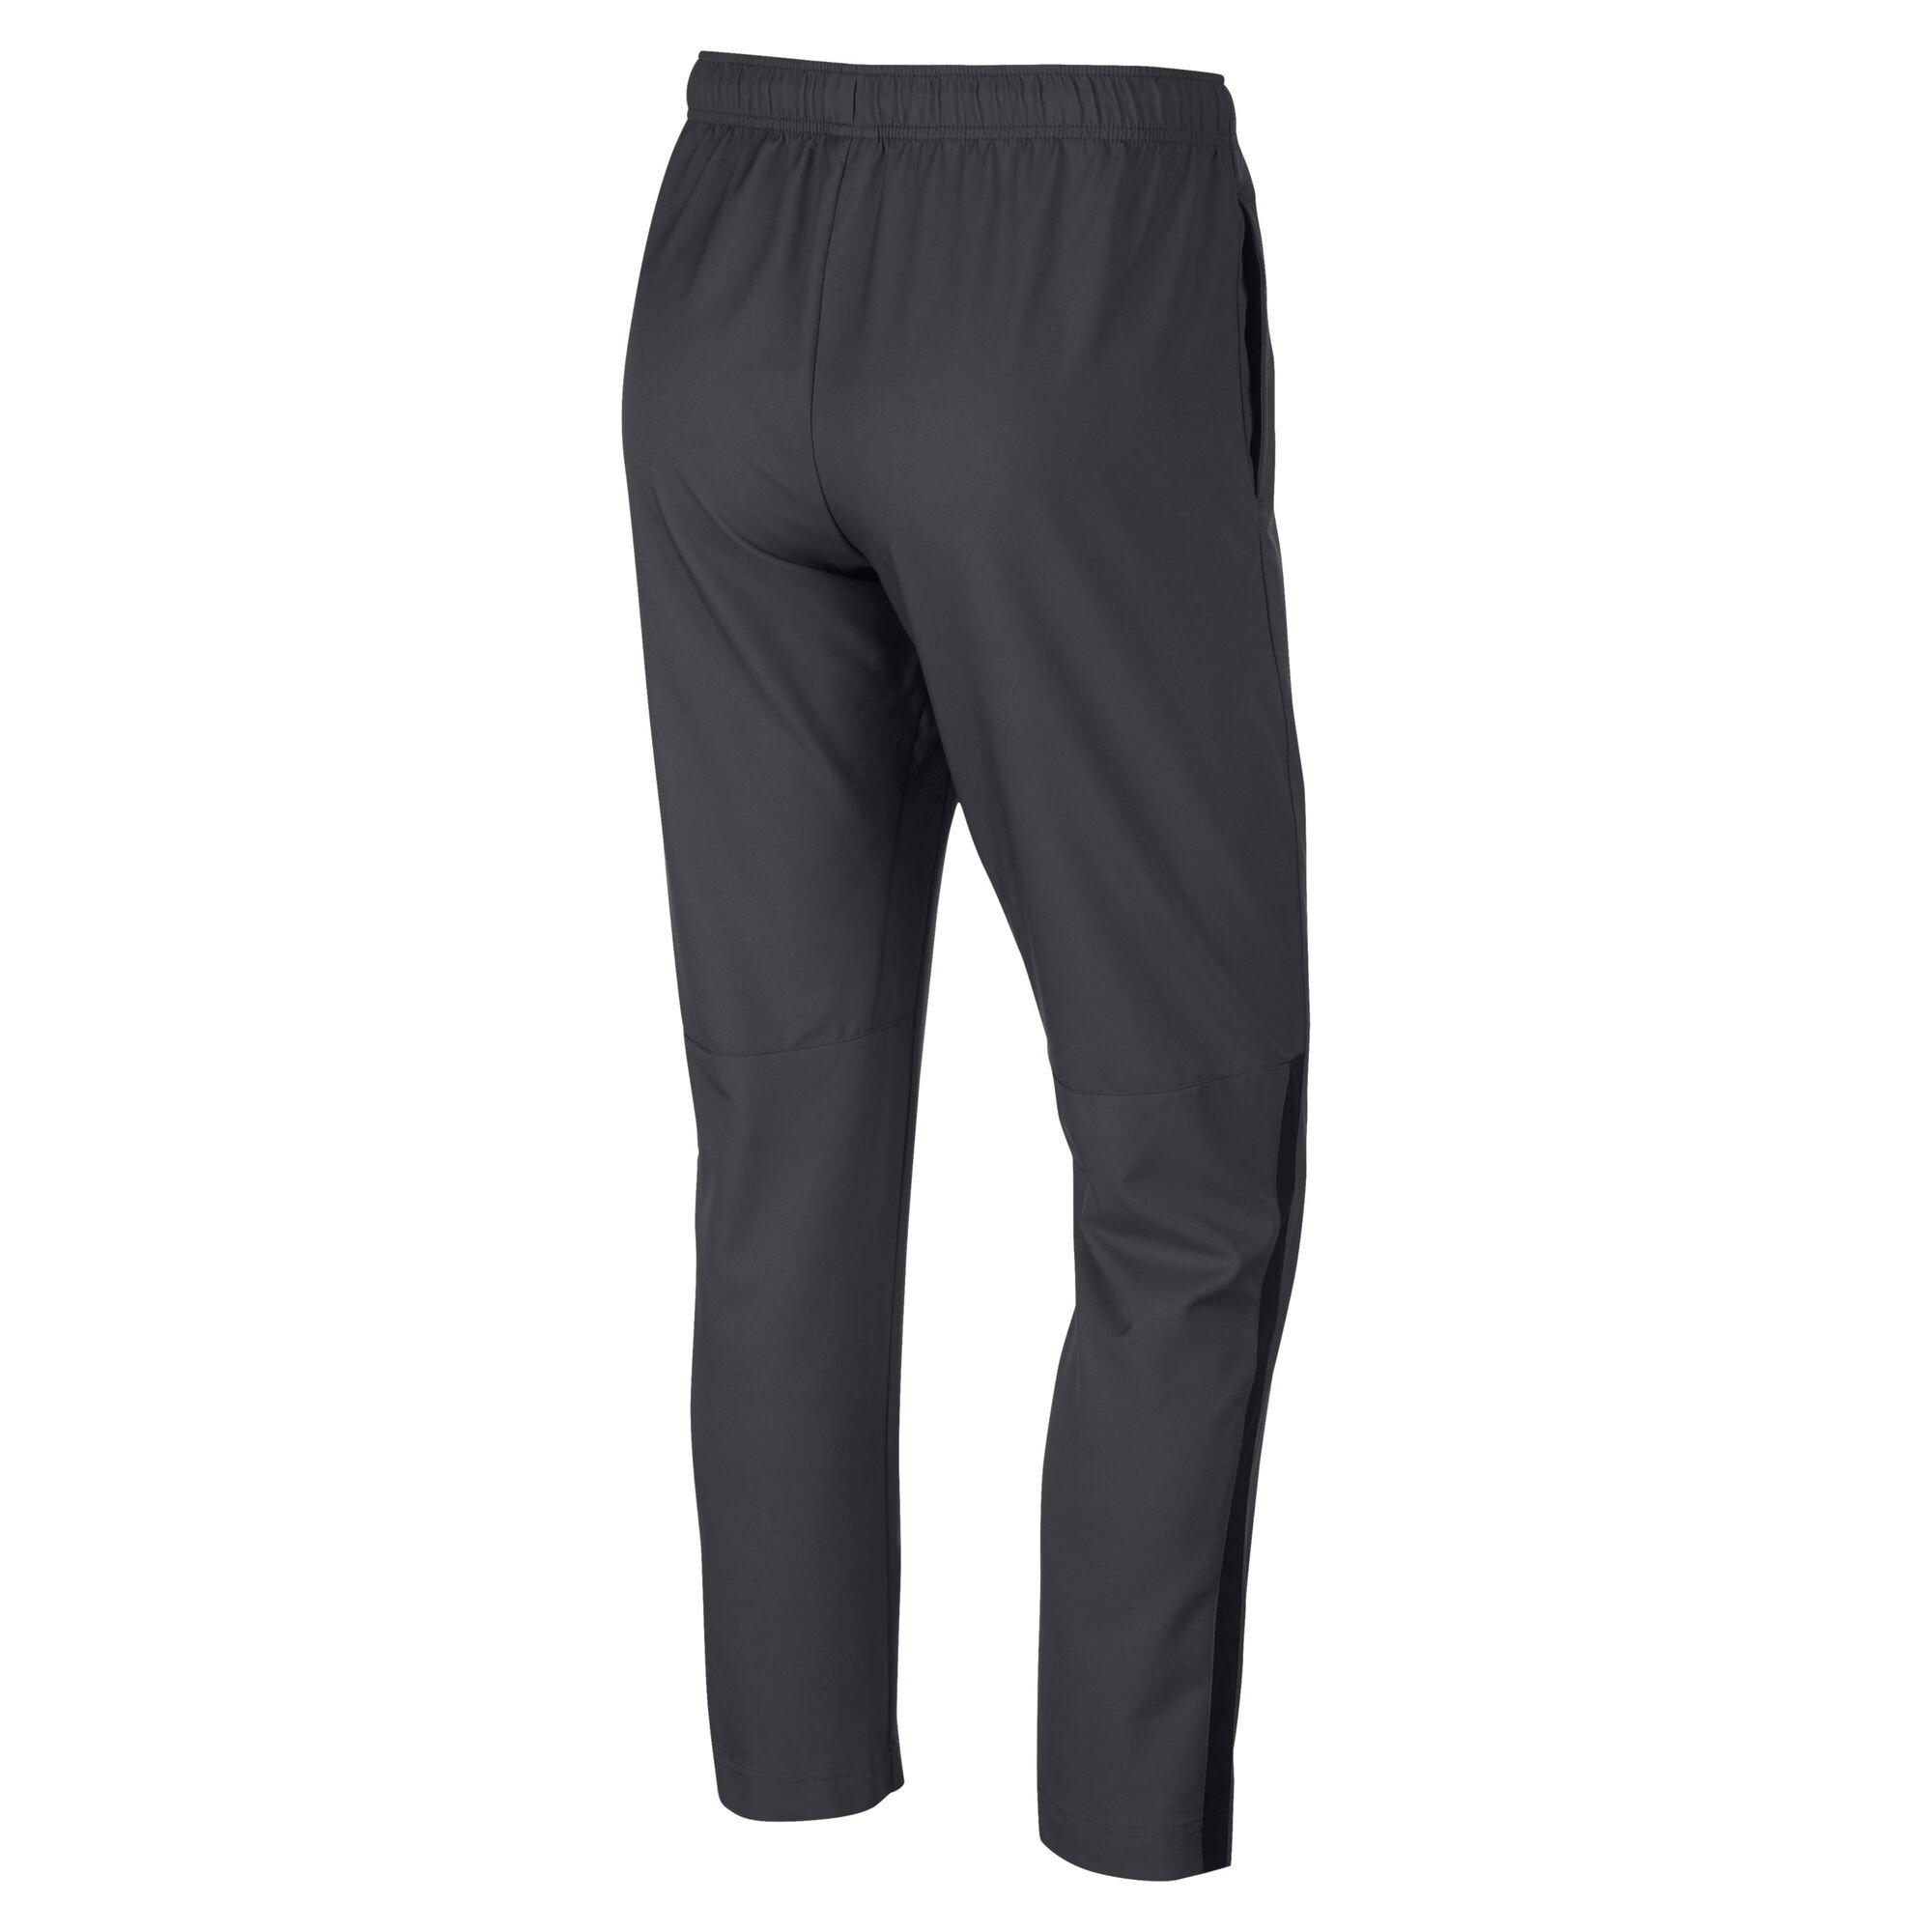 Buy Nike Dry Training Pants Men Dark Grey, Black online | Tennis Point COM